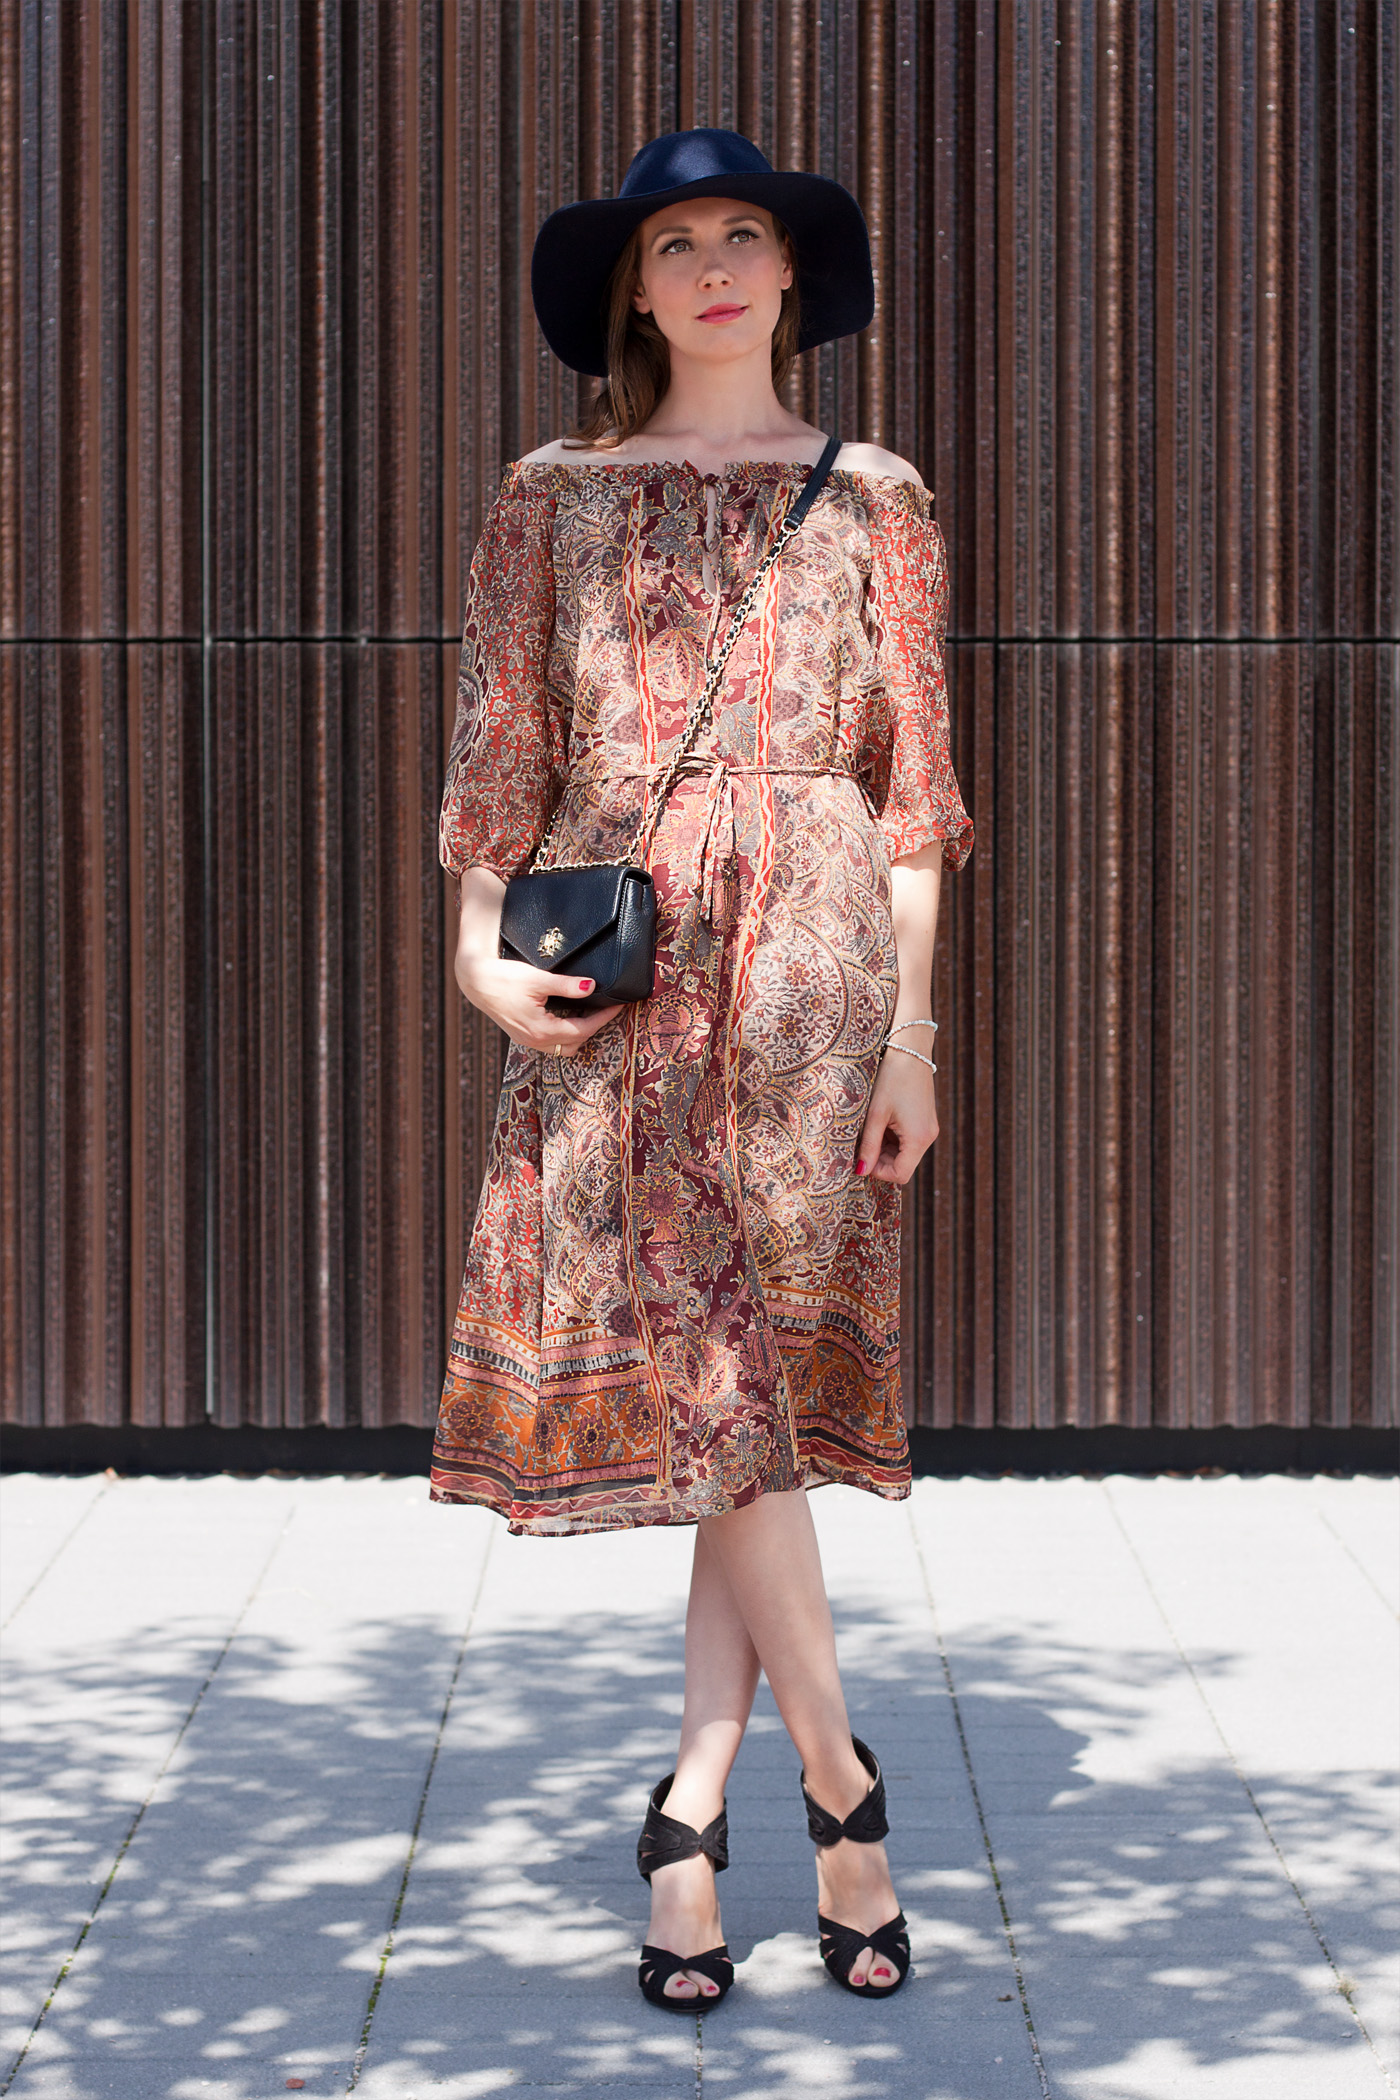 Zara_printed_dress_toryburch_boho_hat_fashionblog_6